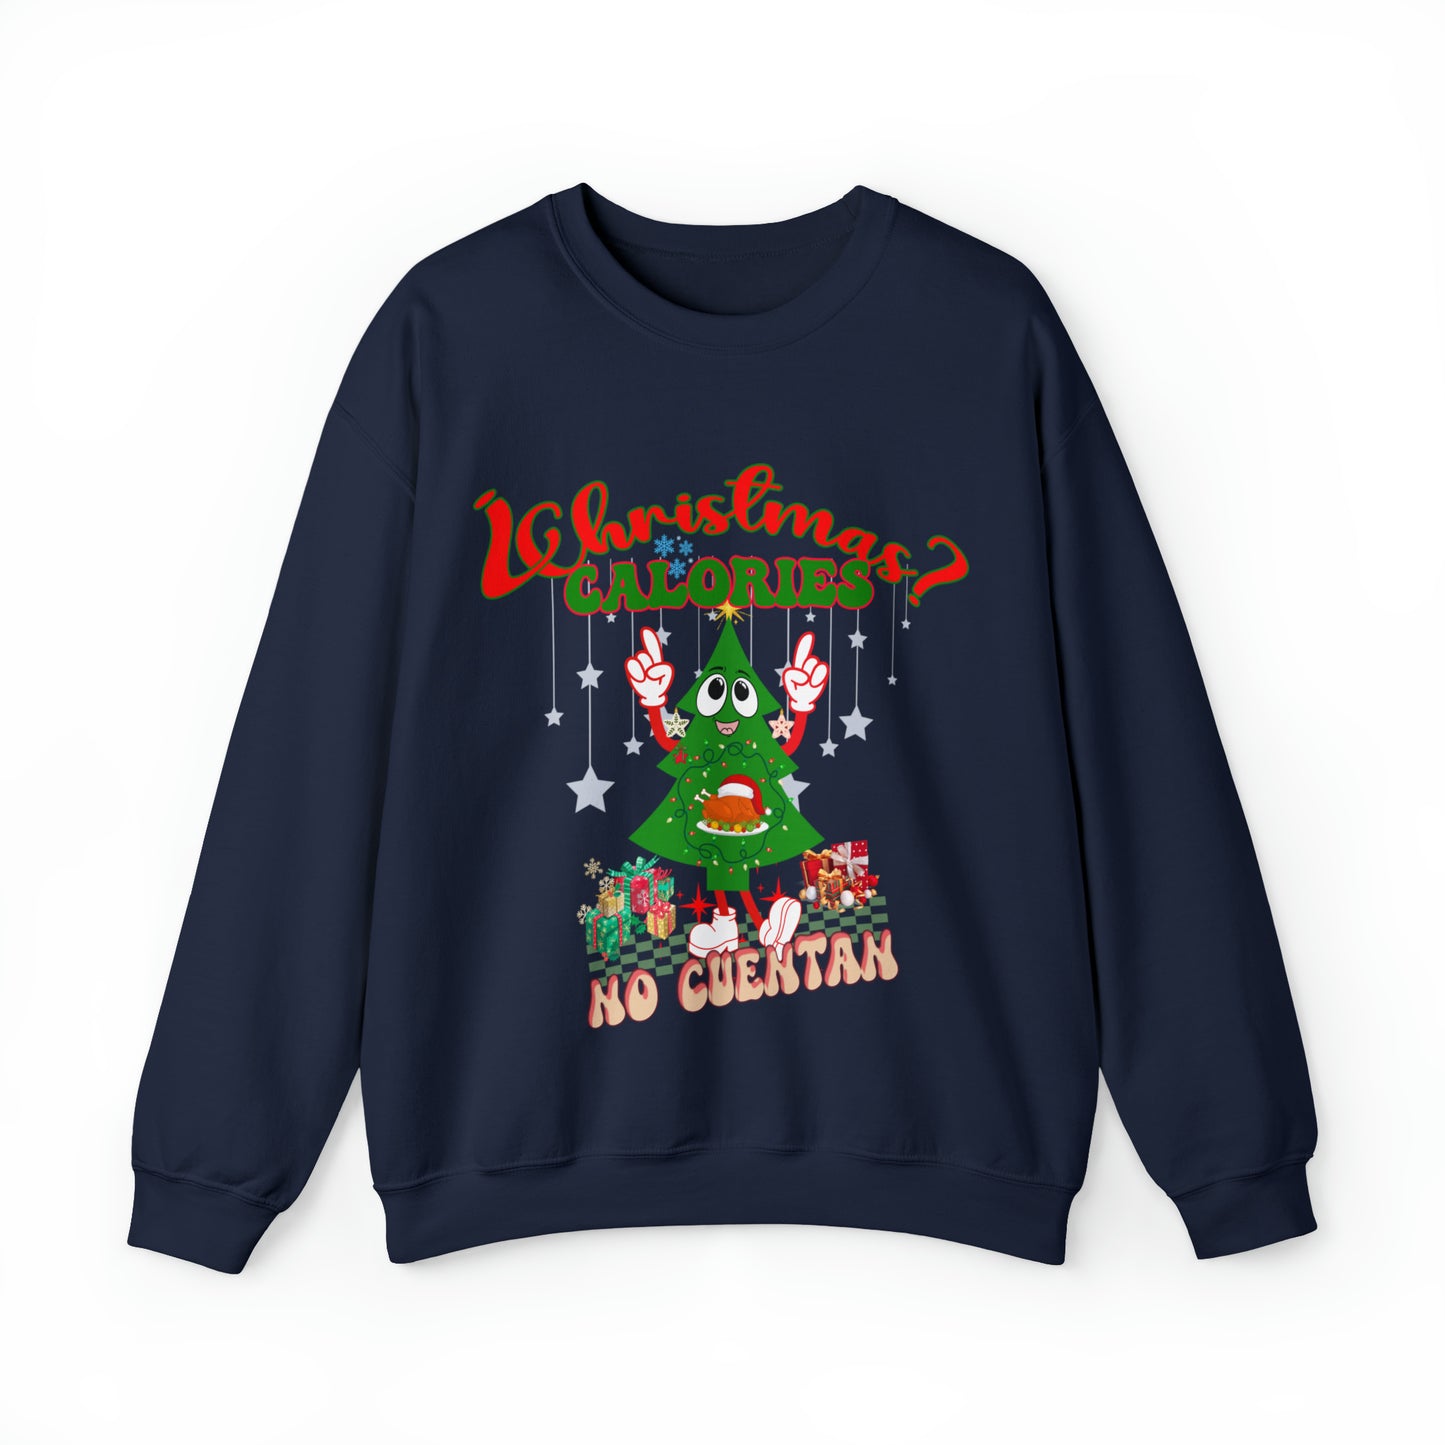 Christmas Calories No Cuentan Sweatshirt, Feliz Navidad Shirt, New Year Sweatshirt, Spanish Christmas Sweatshirt, Holiday Sweaters, S874